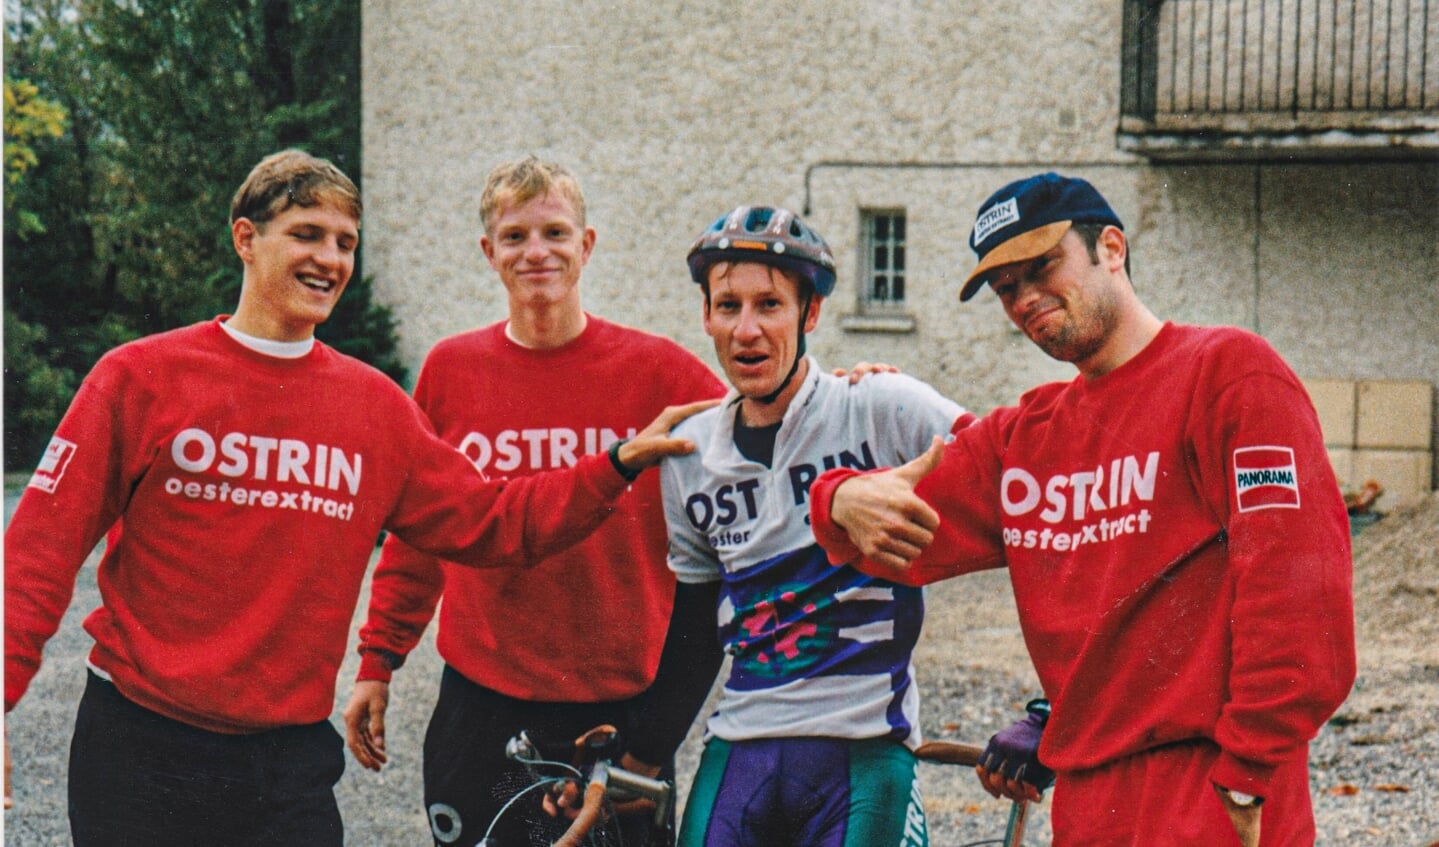 Kameraden. Bram Sikma, Willem Poelstra, fysiotherapeut Eric Wink en Yoeri Lissenberg in hun tijd bij Ostrin.